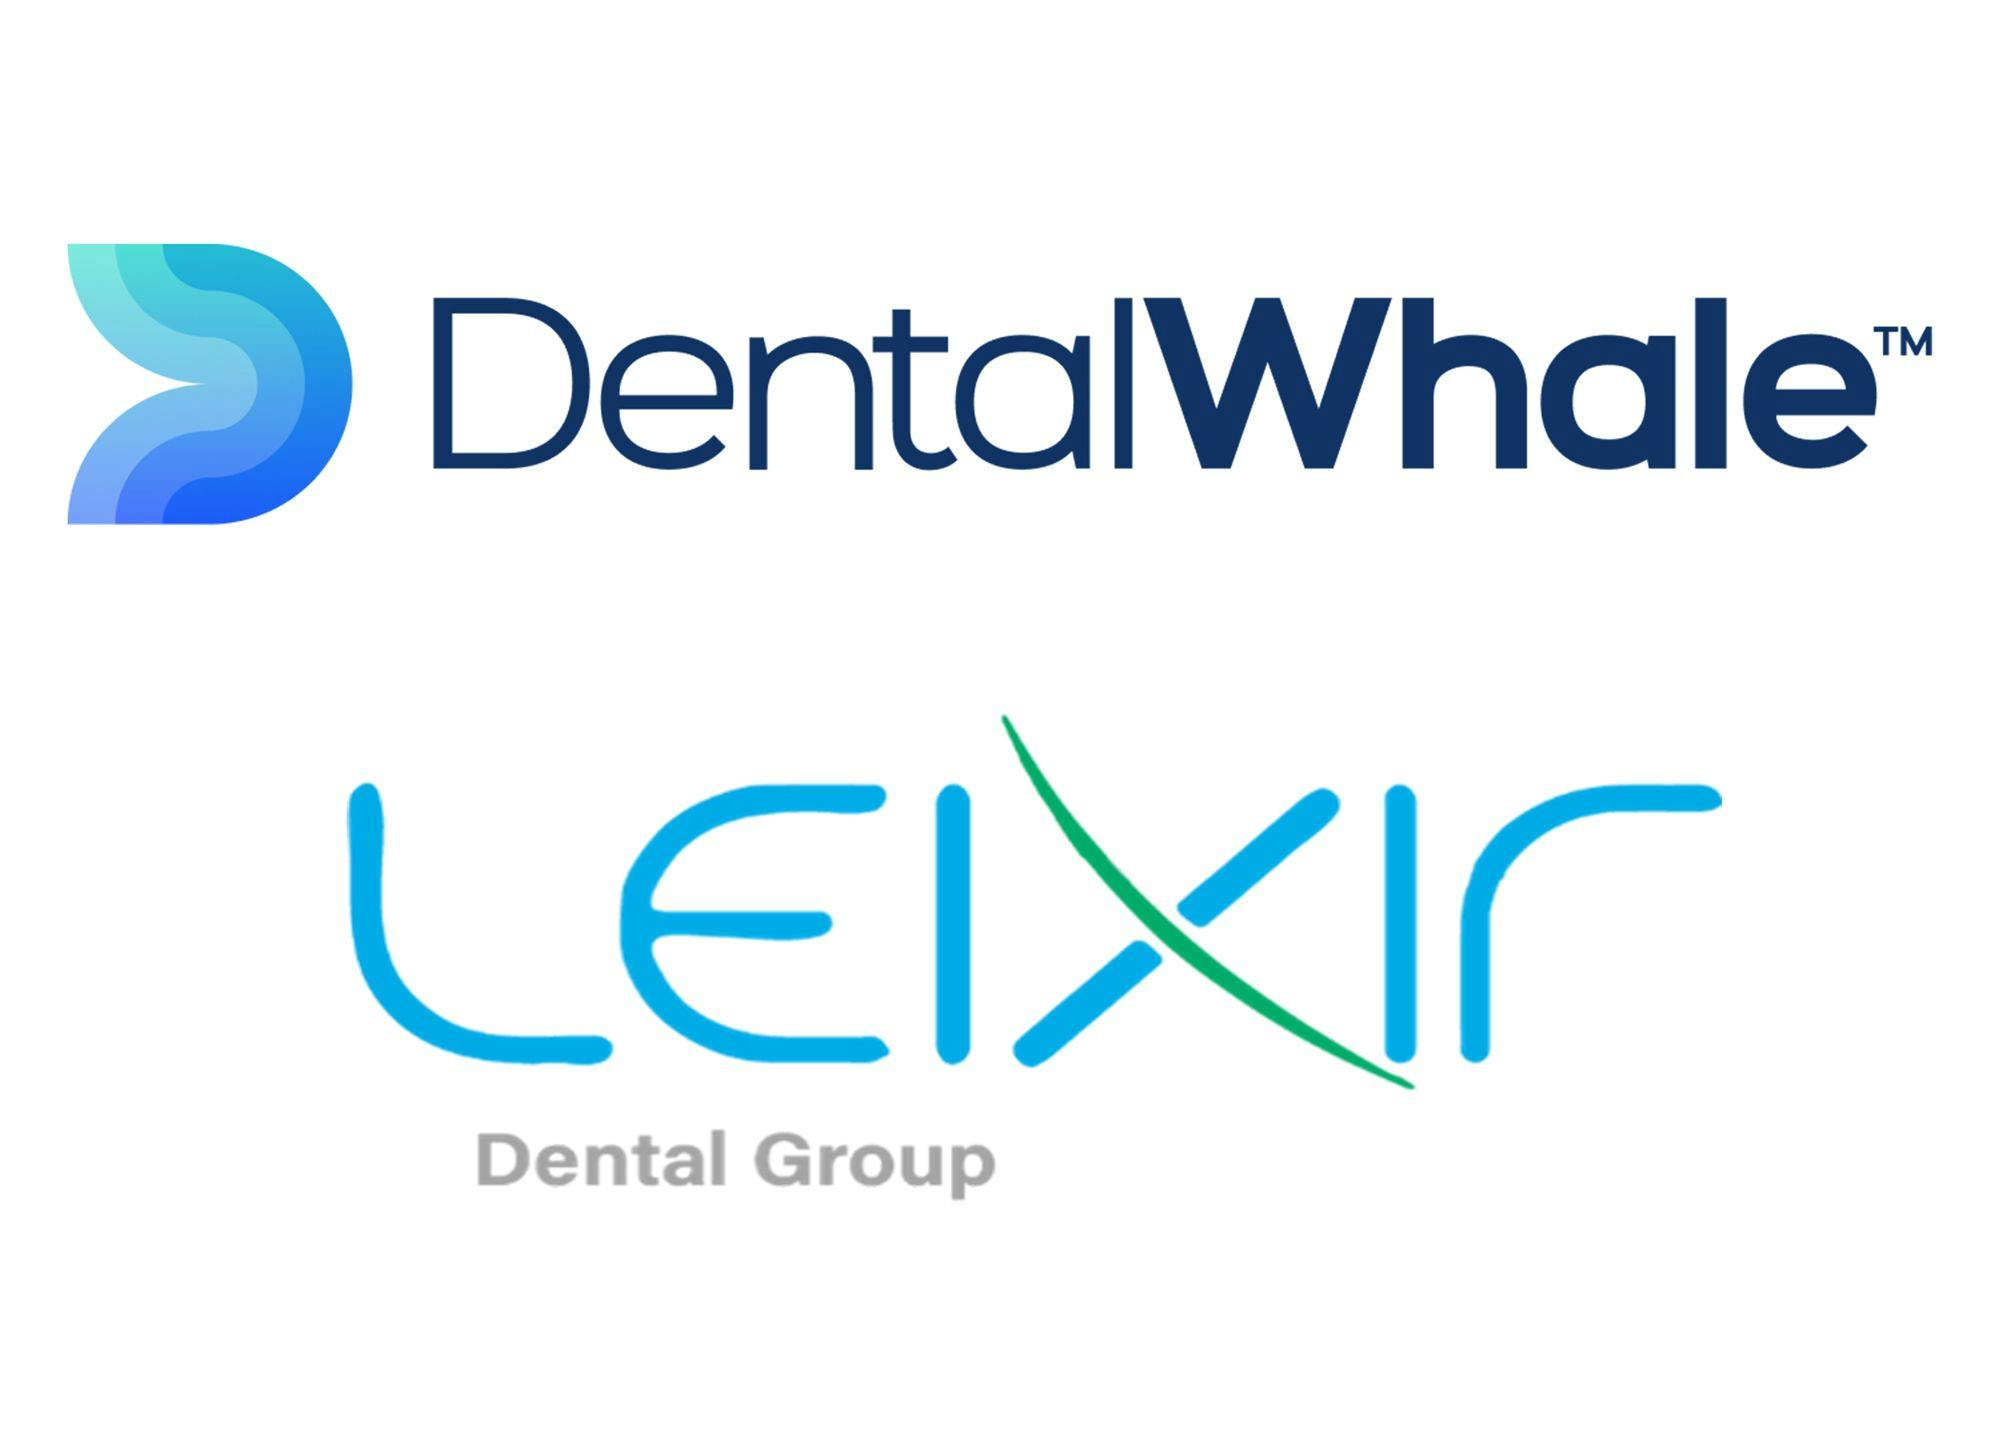 Dental Whale and Leixir Dental Group Partner Up